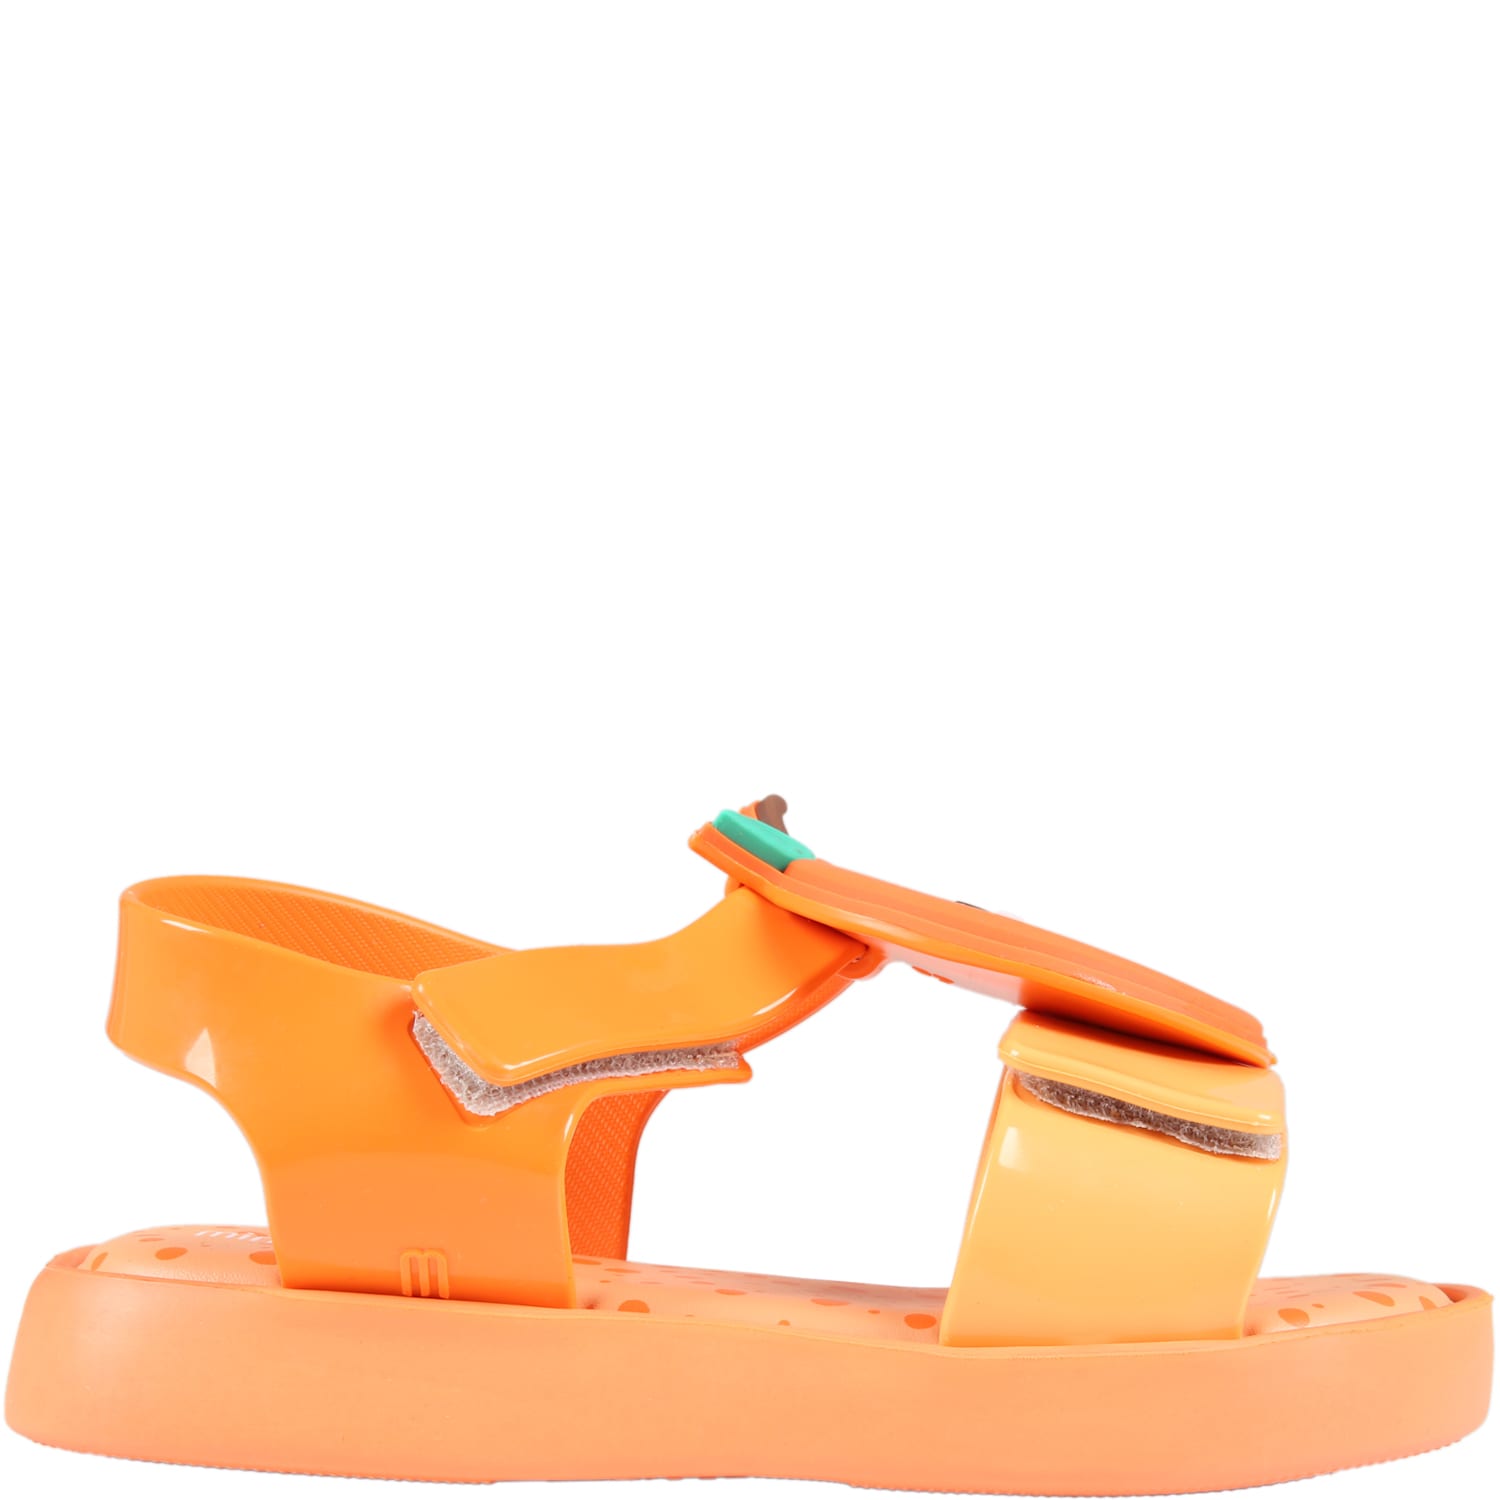 Melissa Orange Sandals For Kids With Orange